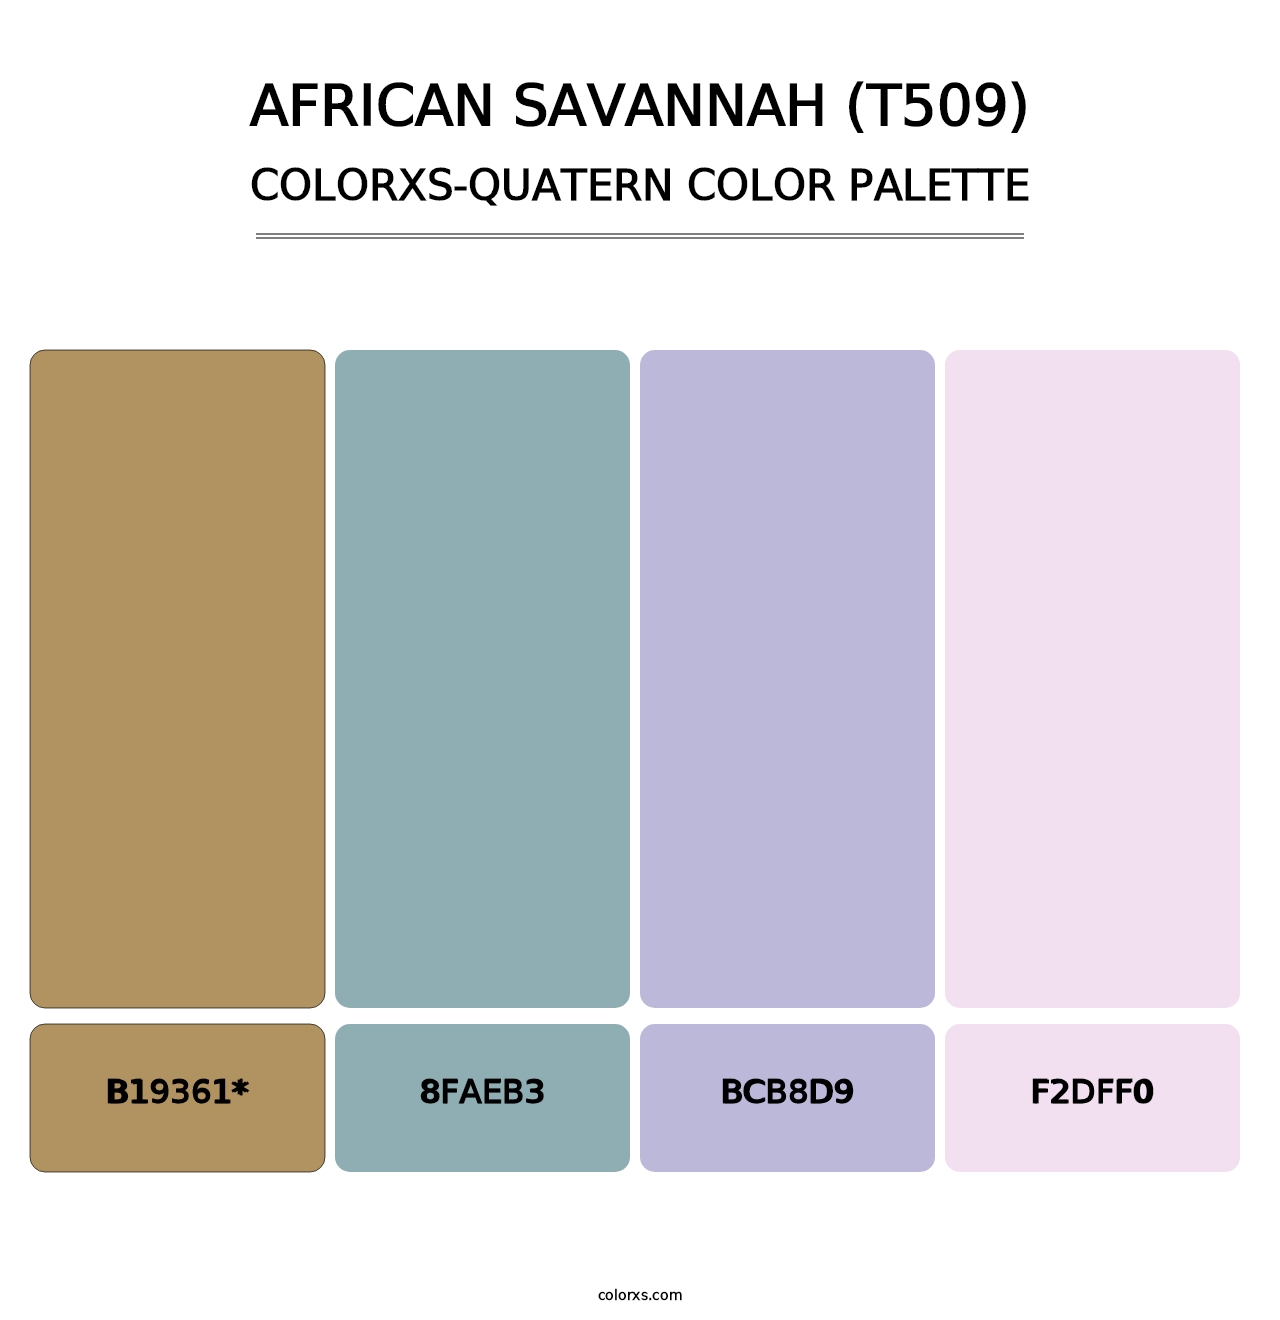 African Savannah (T509) - Colorxs Quatern Palette